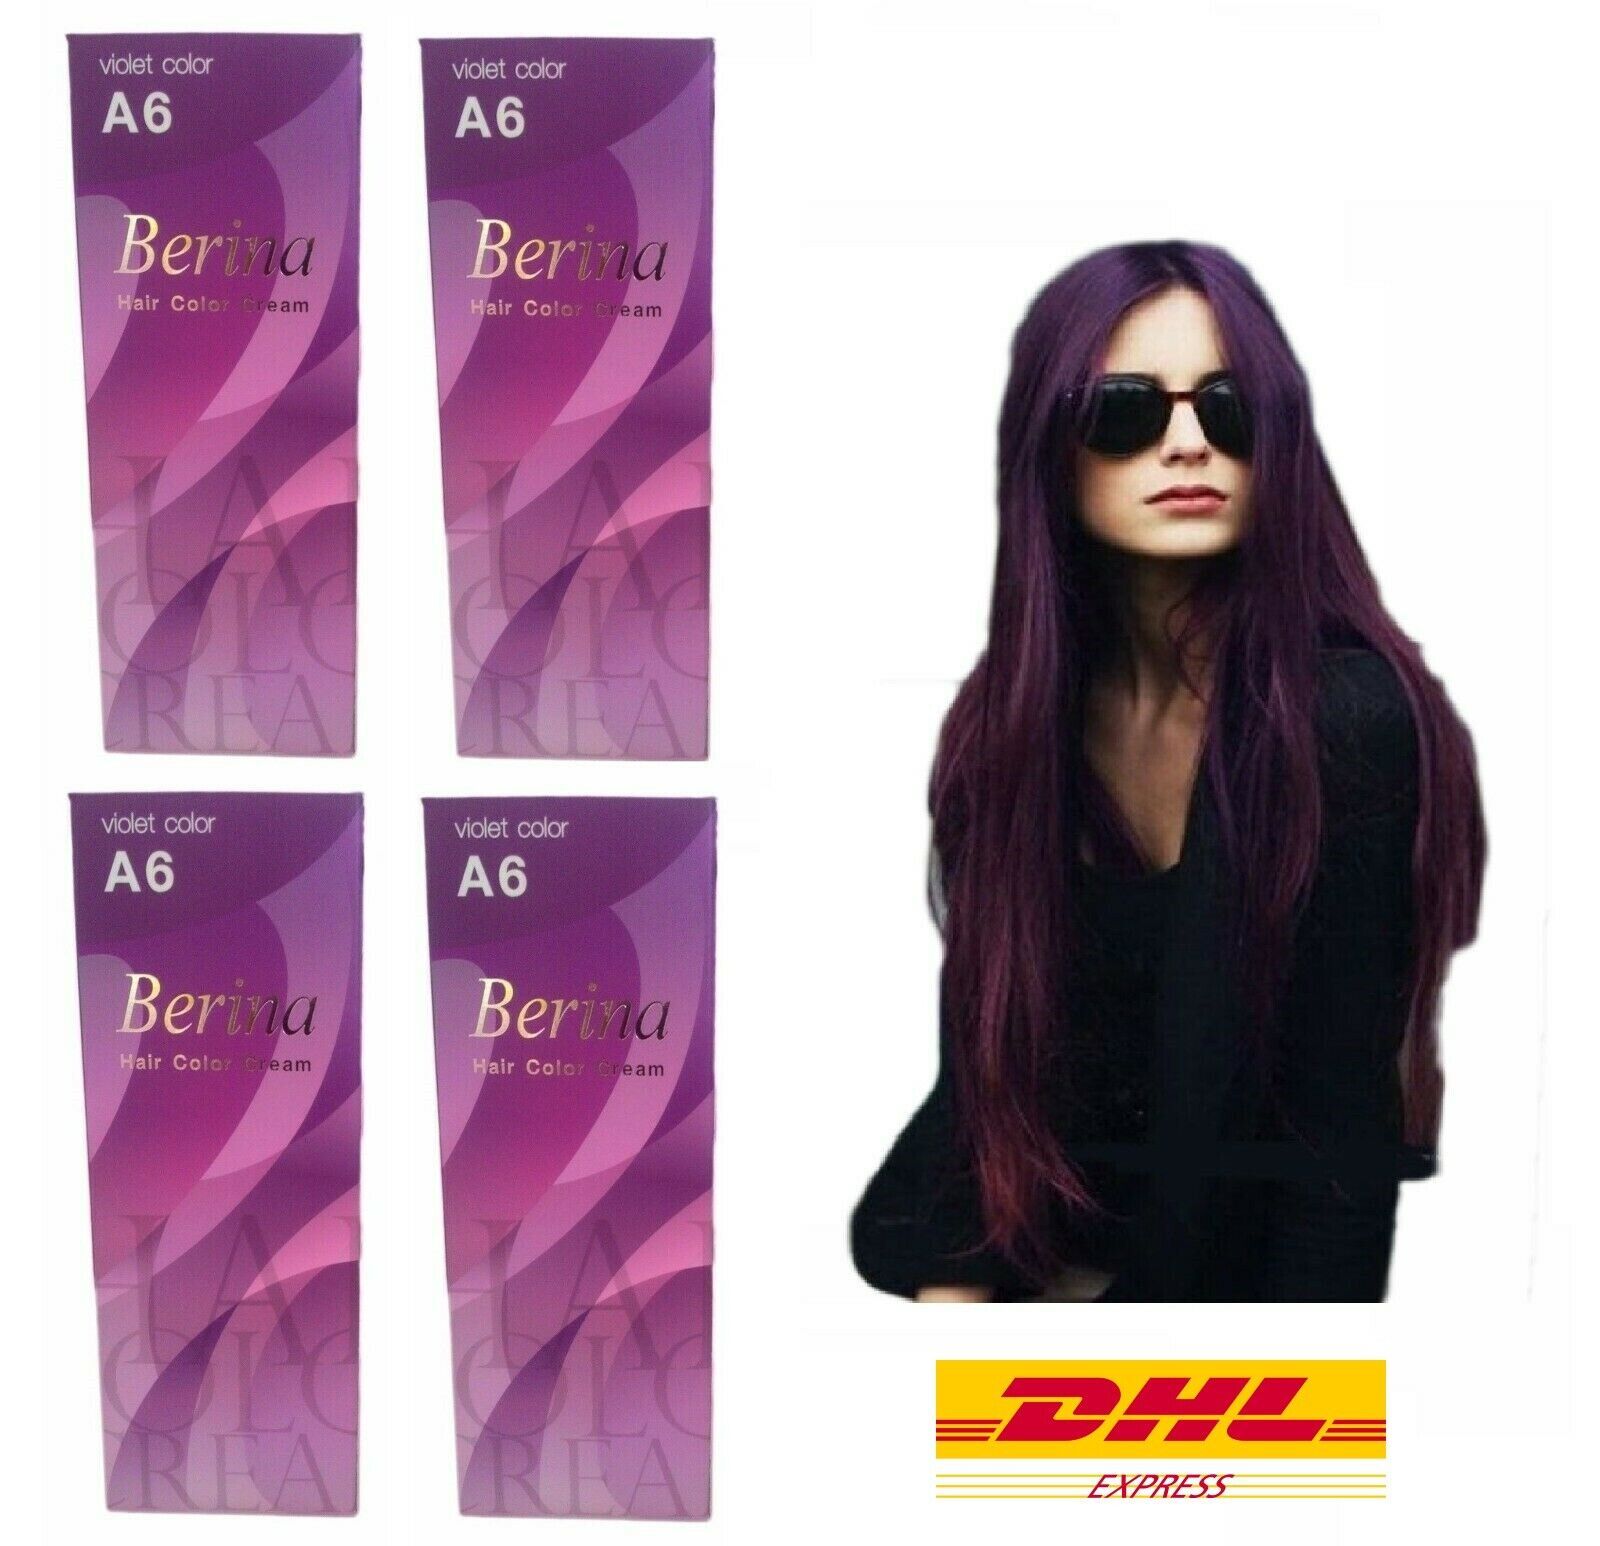 Berina Hair Dye: 2 customer reviews and 17 listings